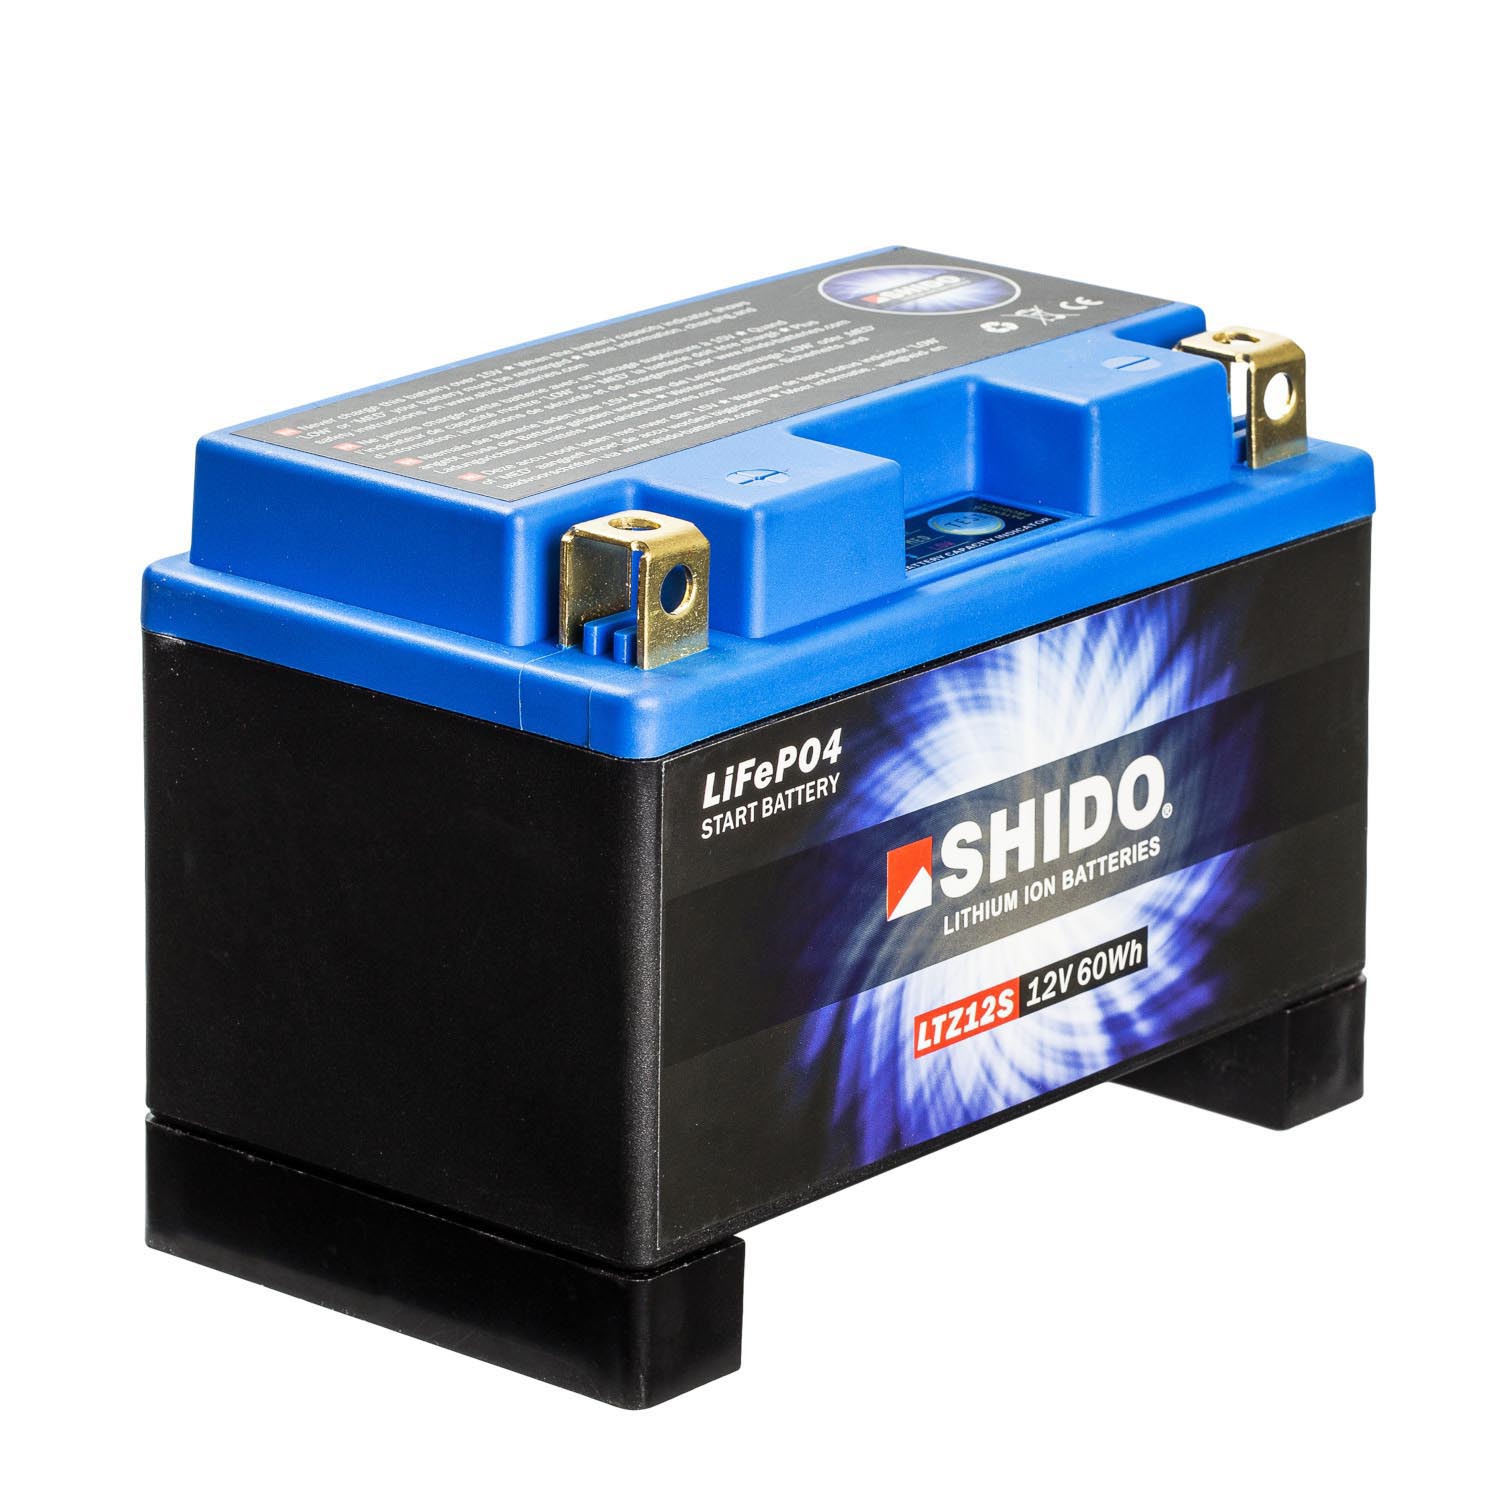 Shido Lithium Motorradbatterie LiFePO4 LTZ12S 12V